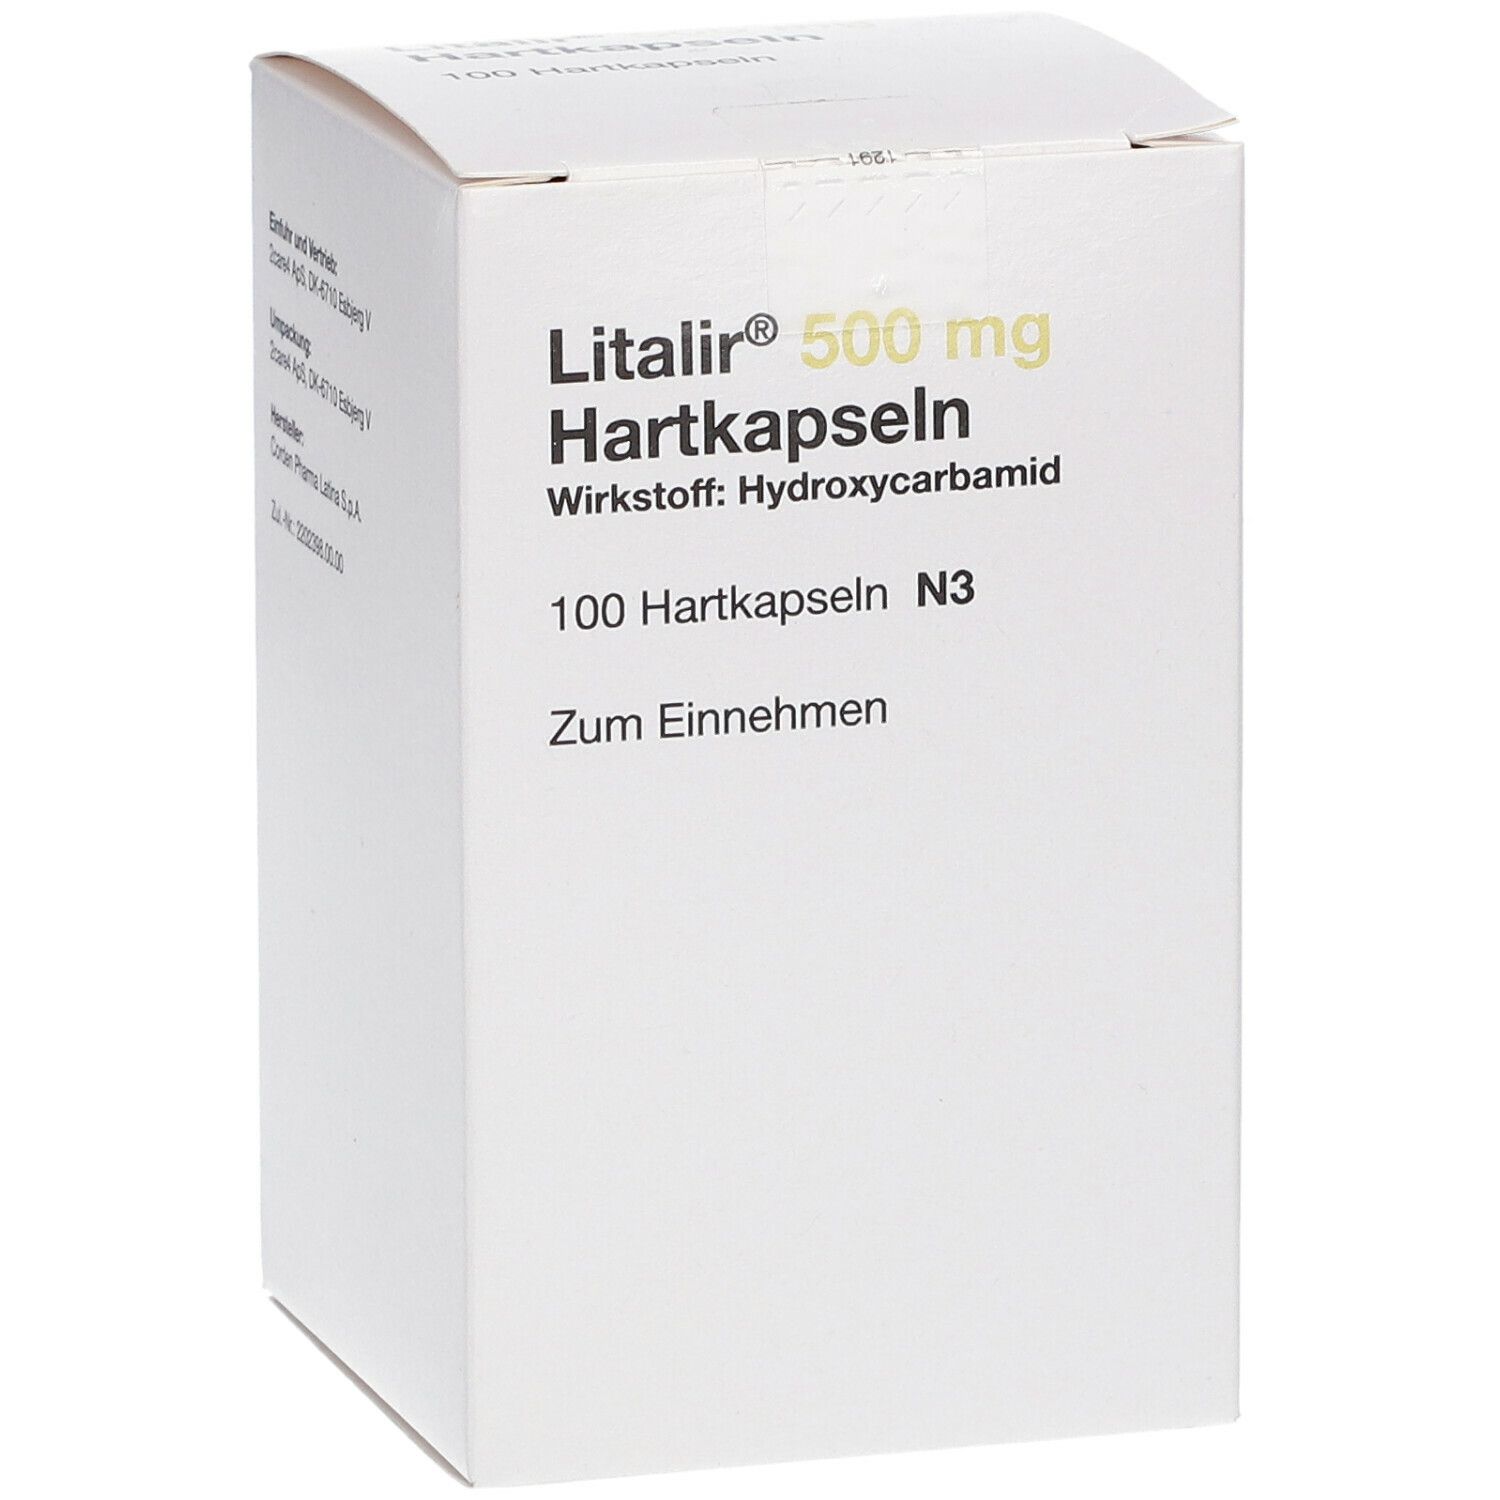 Litalir 500 mg